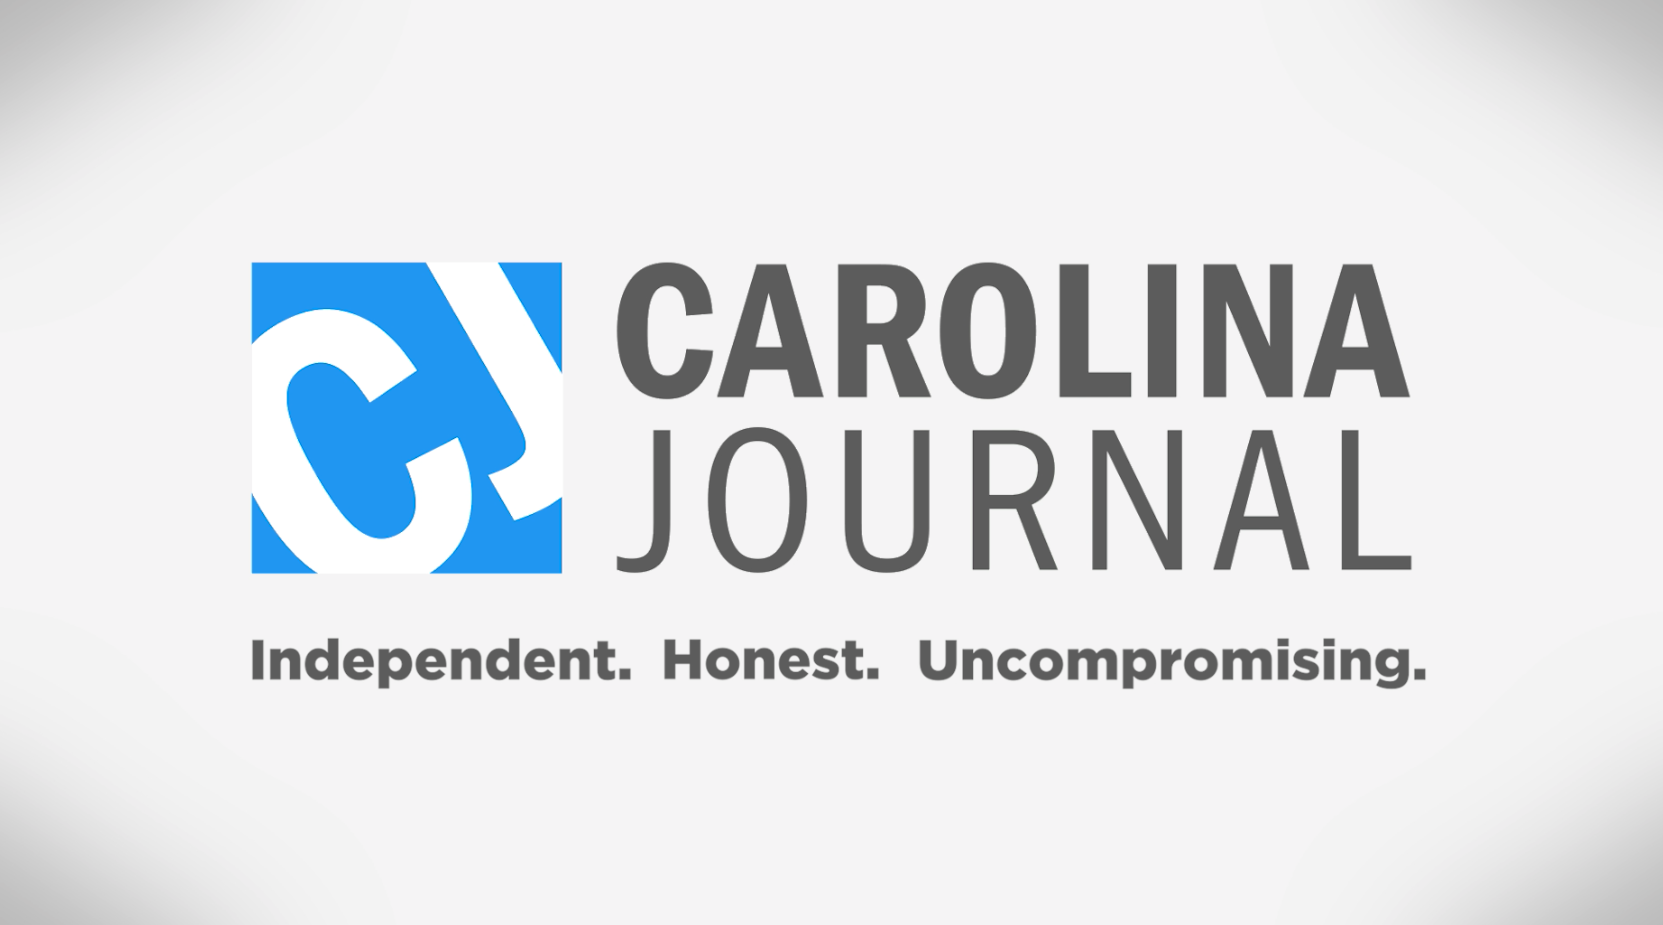 www.carolinajournal.com